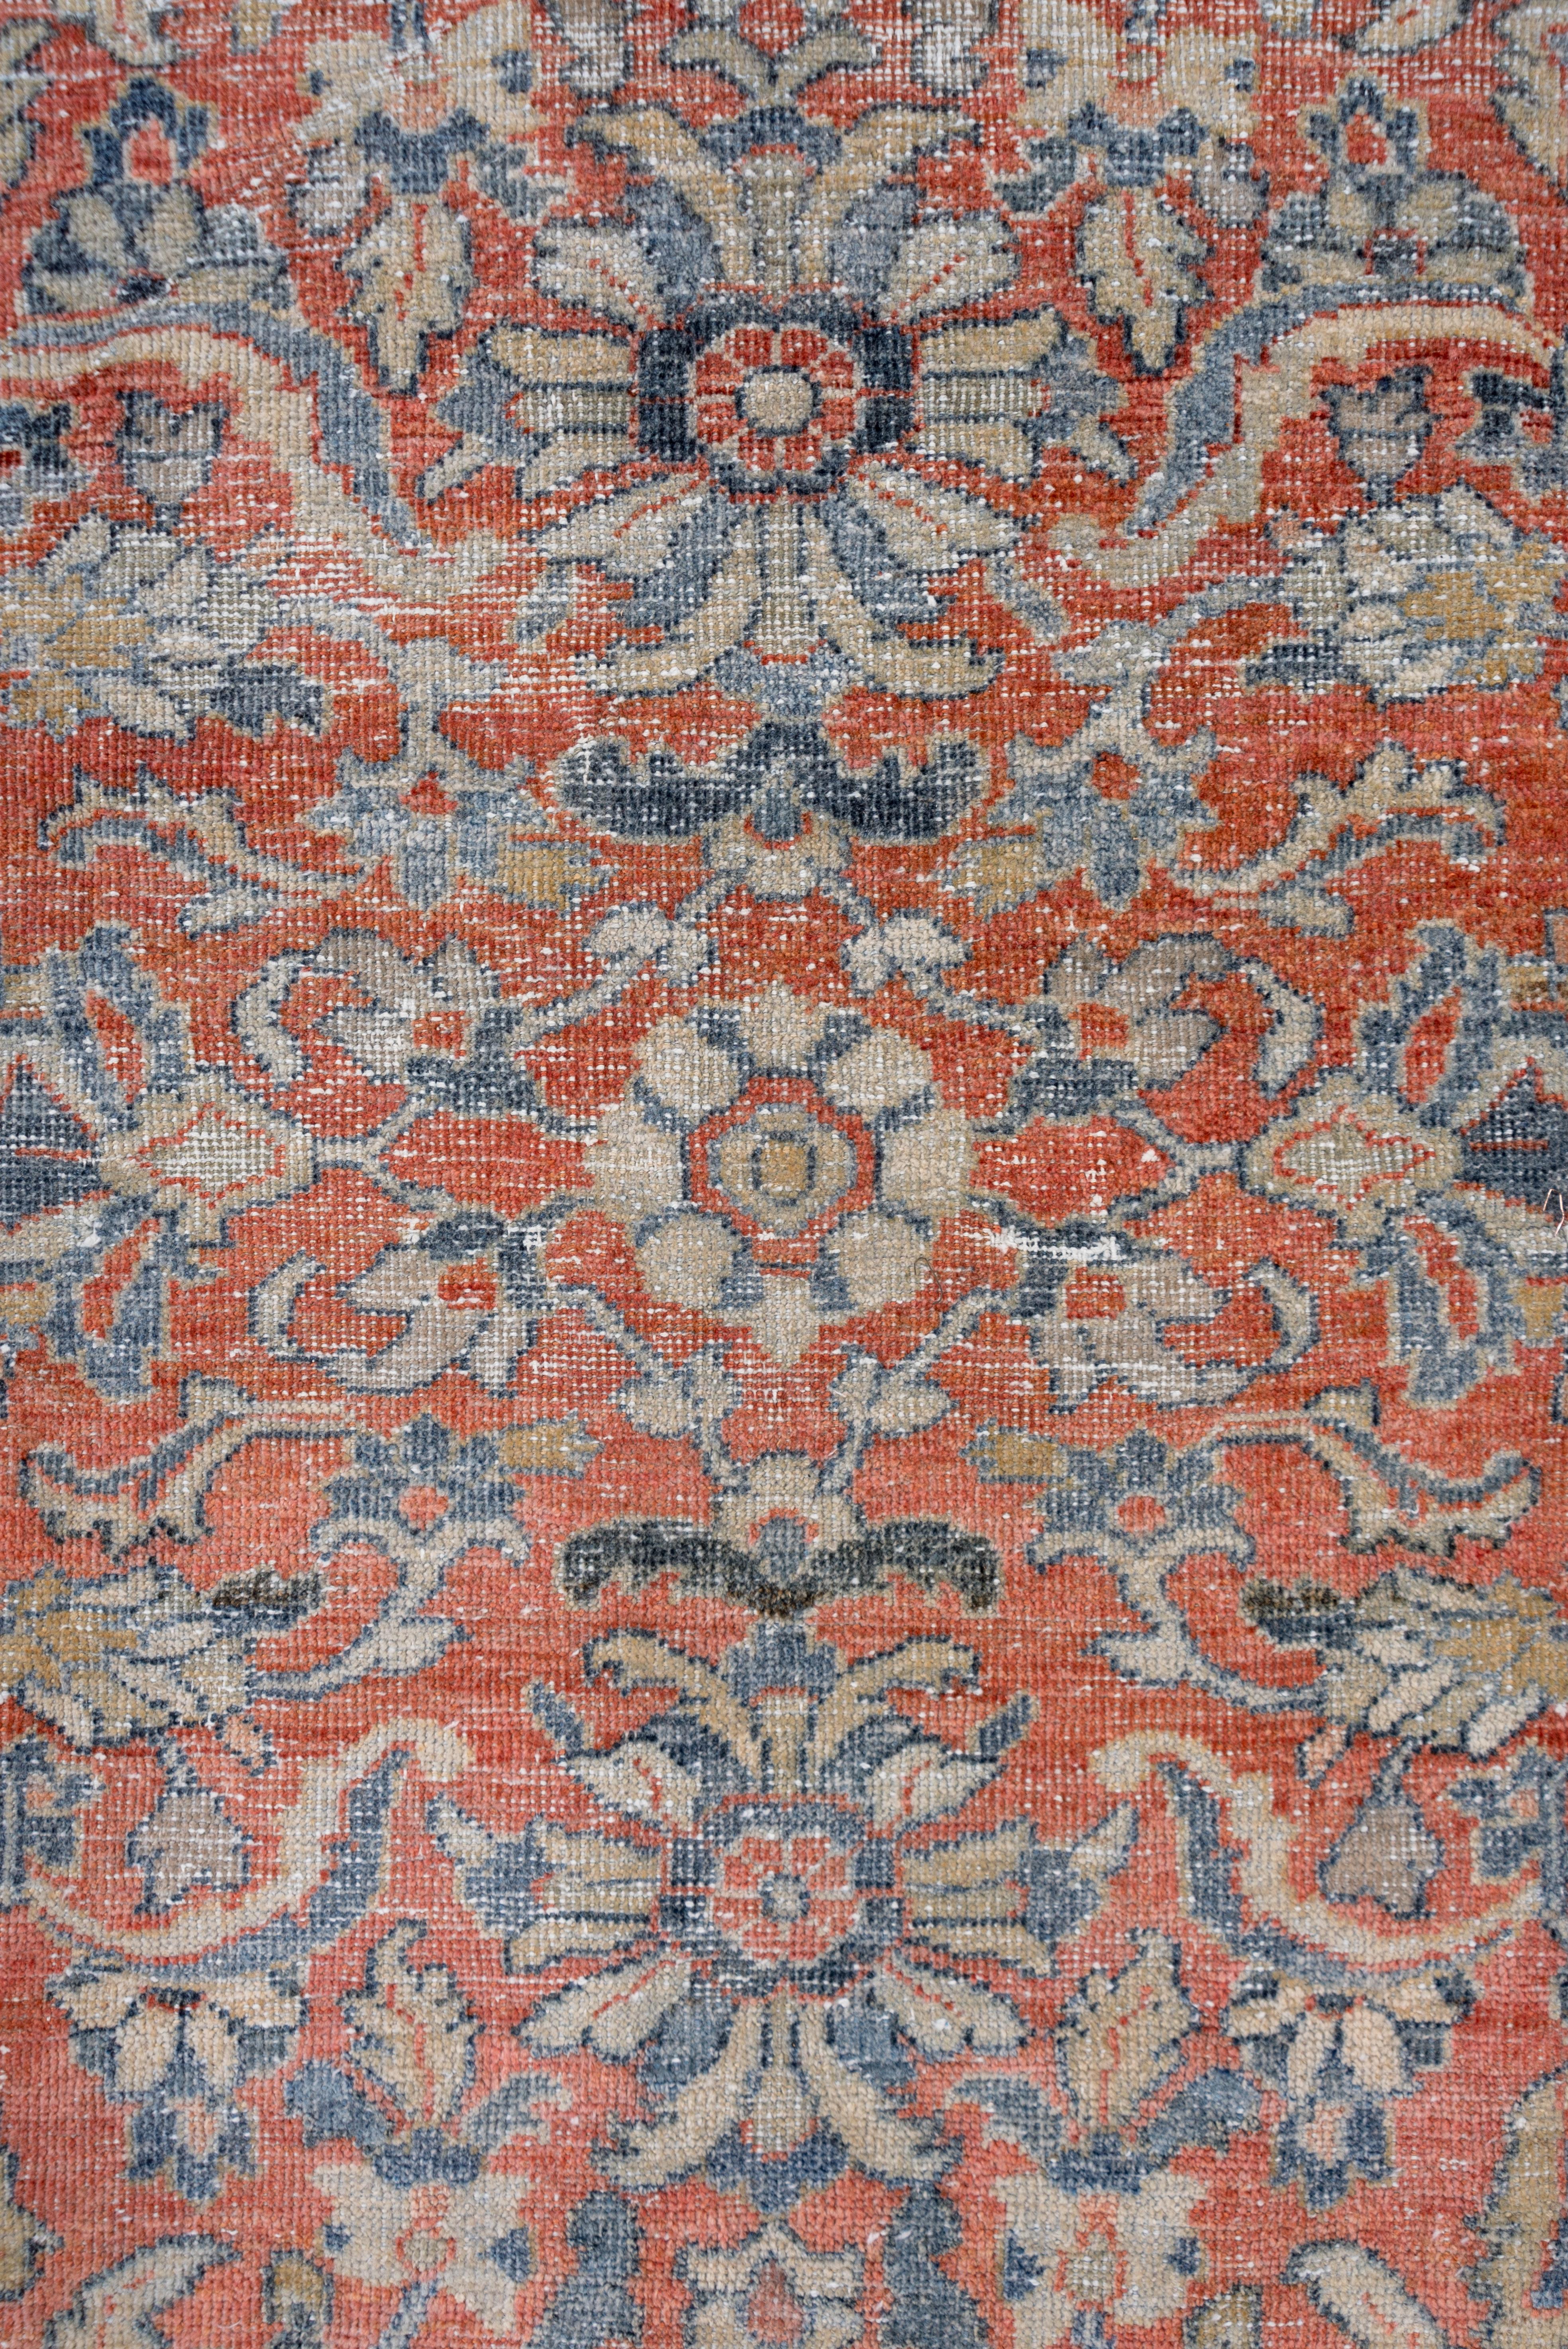 Tribal Bright Persian Mahal Carpet, Red Field